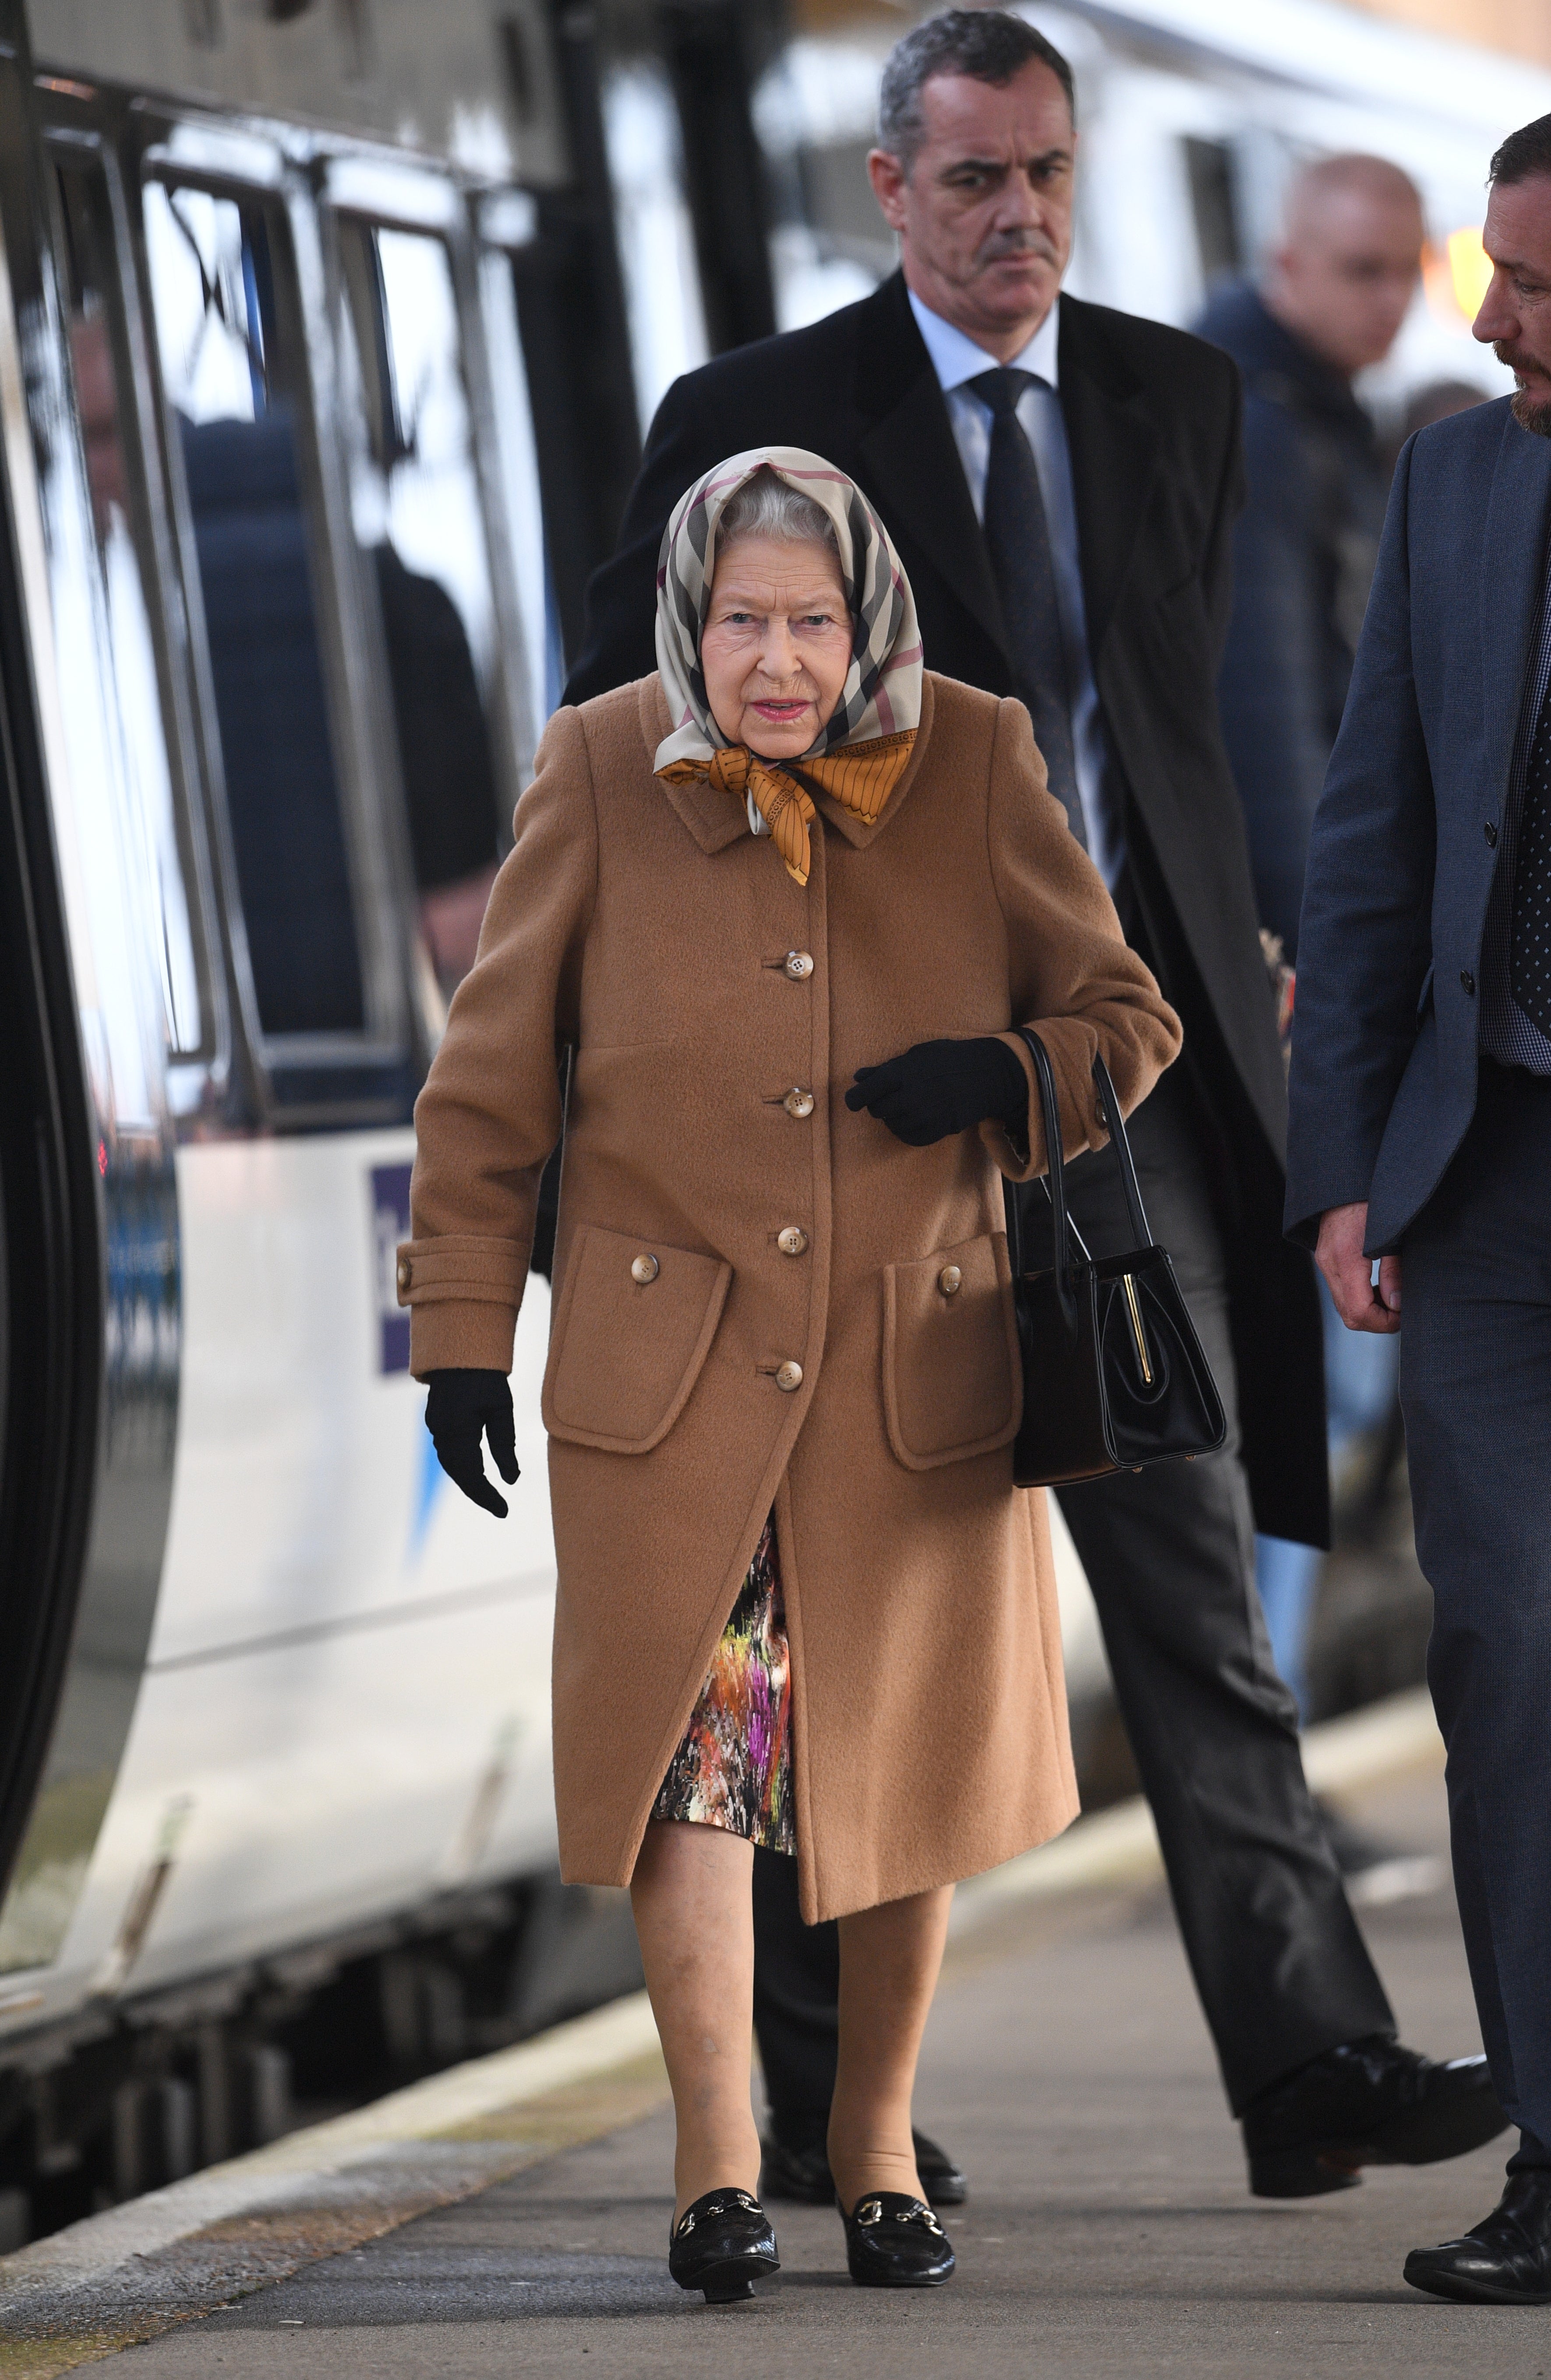 The Queen arrives at King’s Lynn railway station in Norfolk (Joe Giddens/PA)